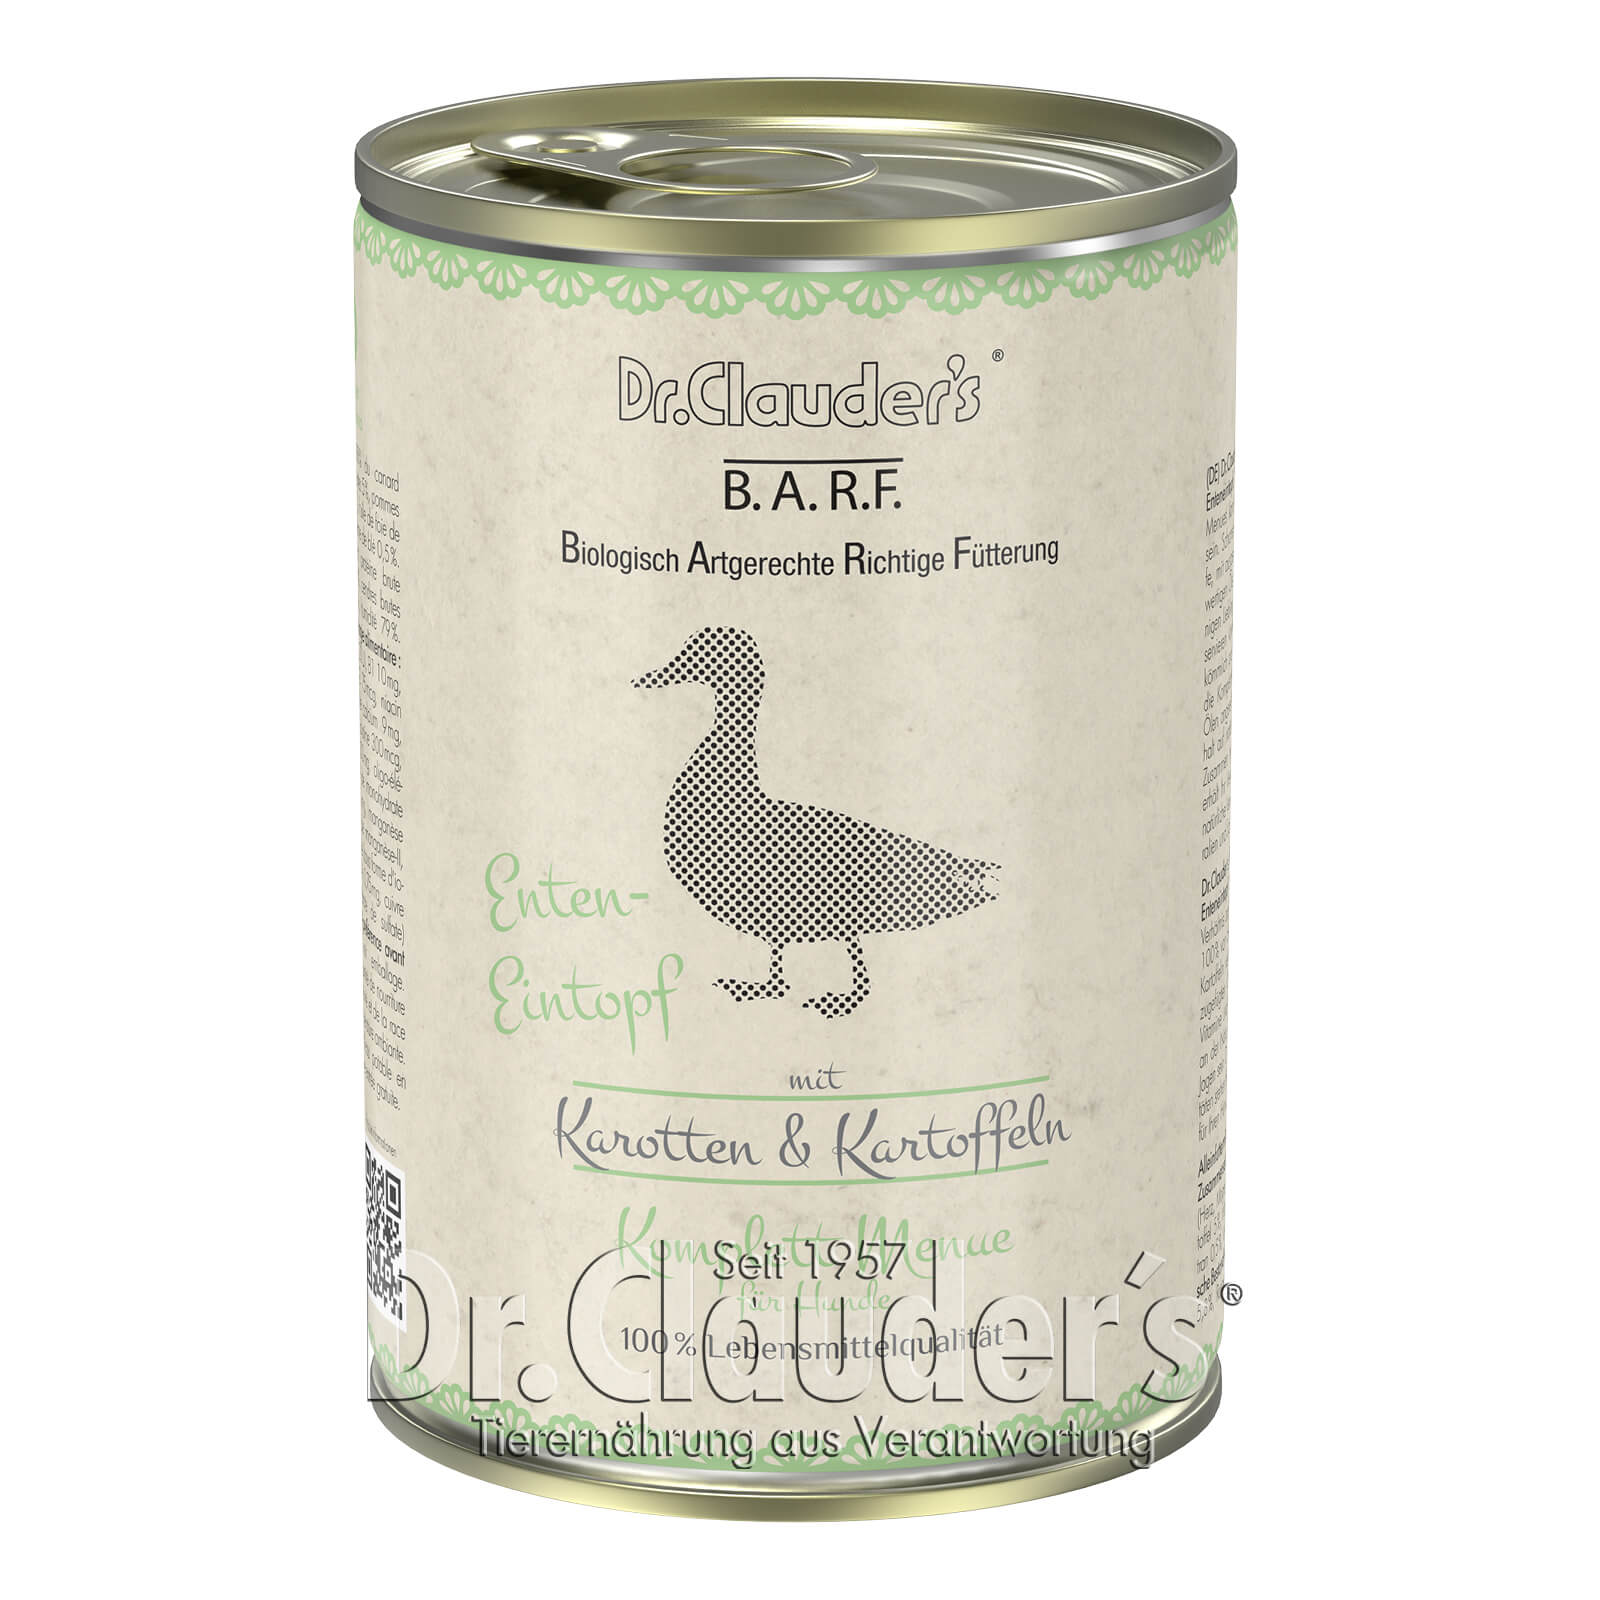 Dr.Clauder's B.A.R.F. Complete Menu Duck Stew